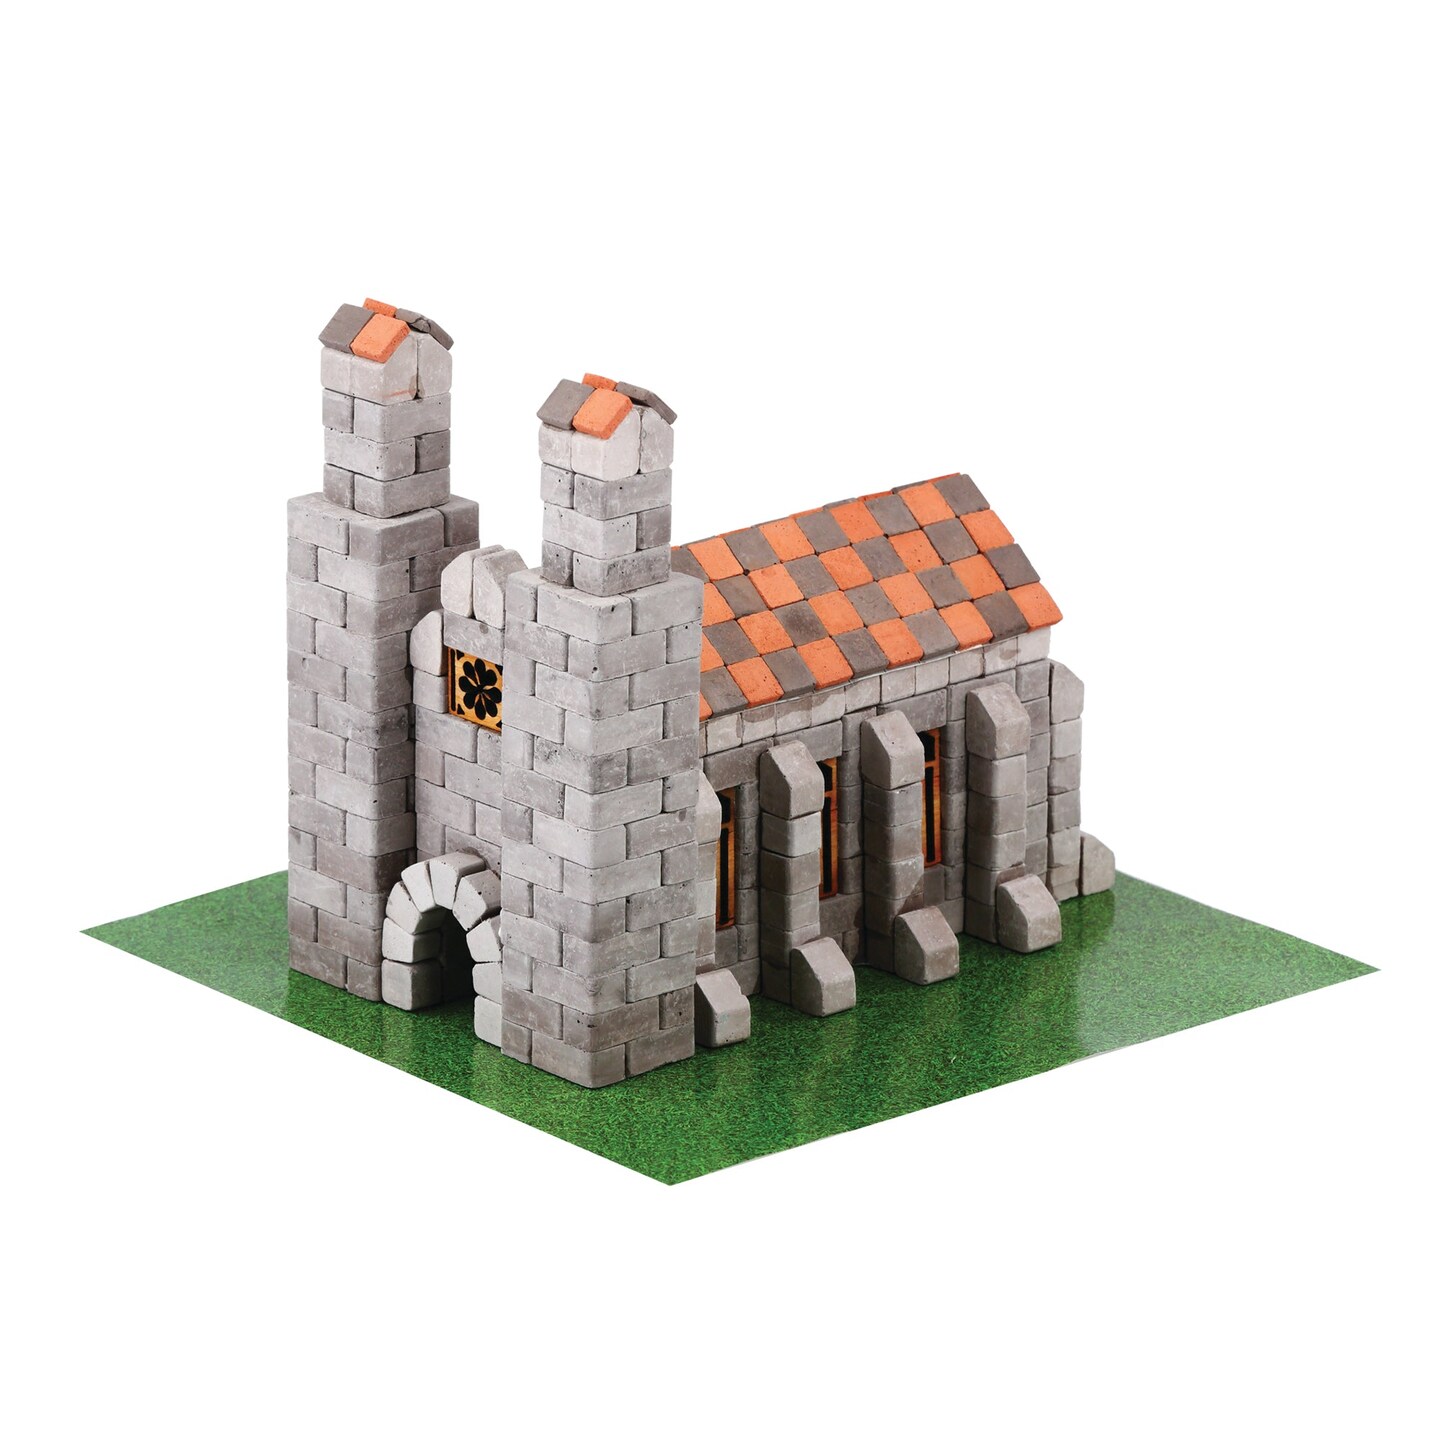 Mini Bricks Construction Set - German Church